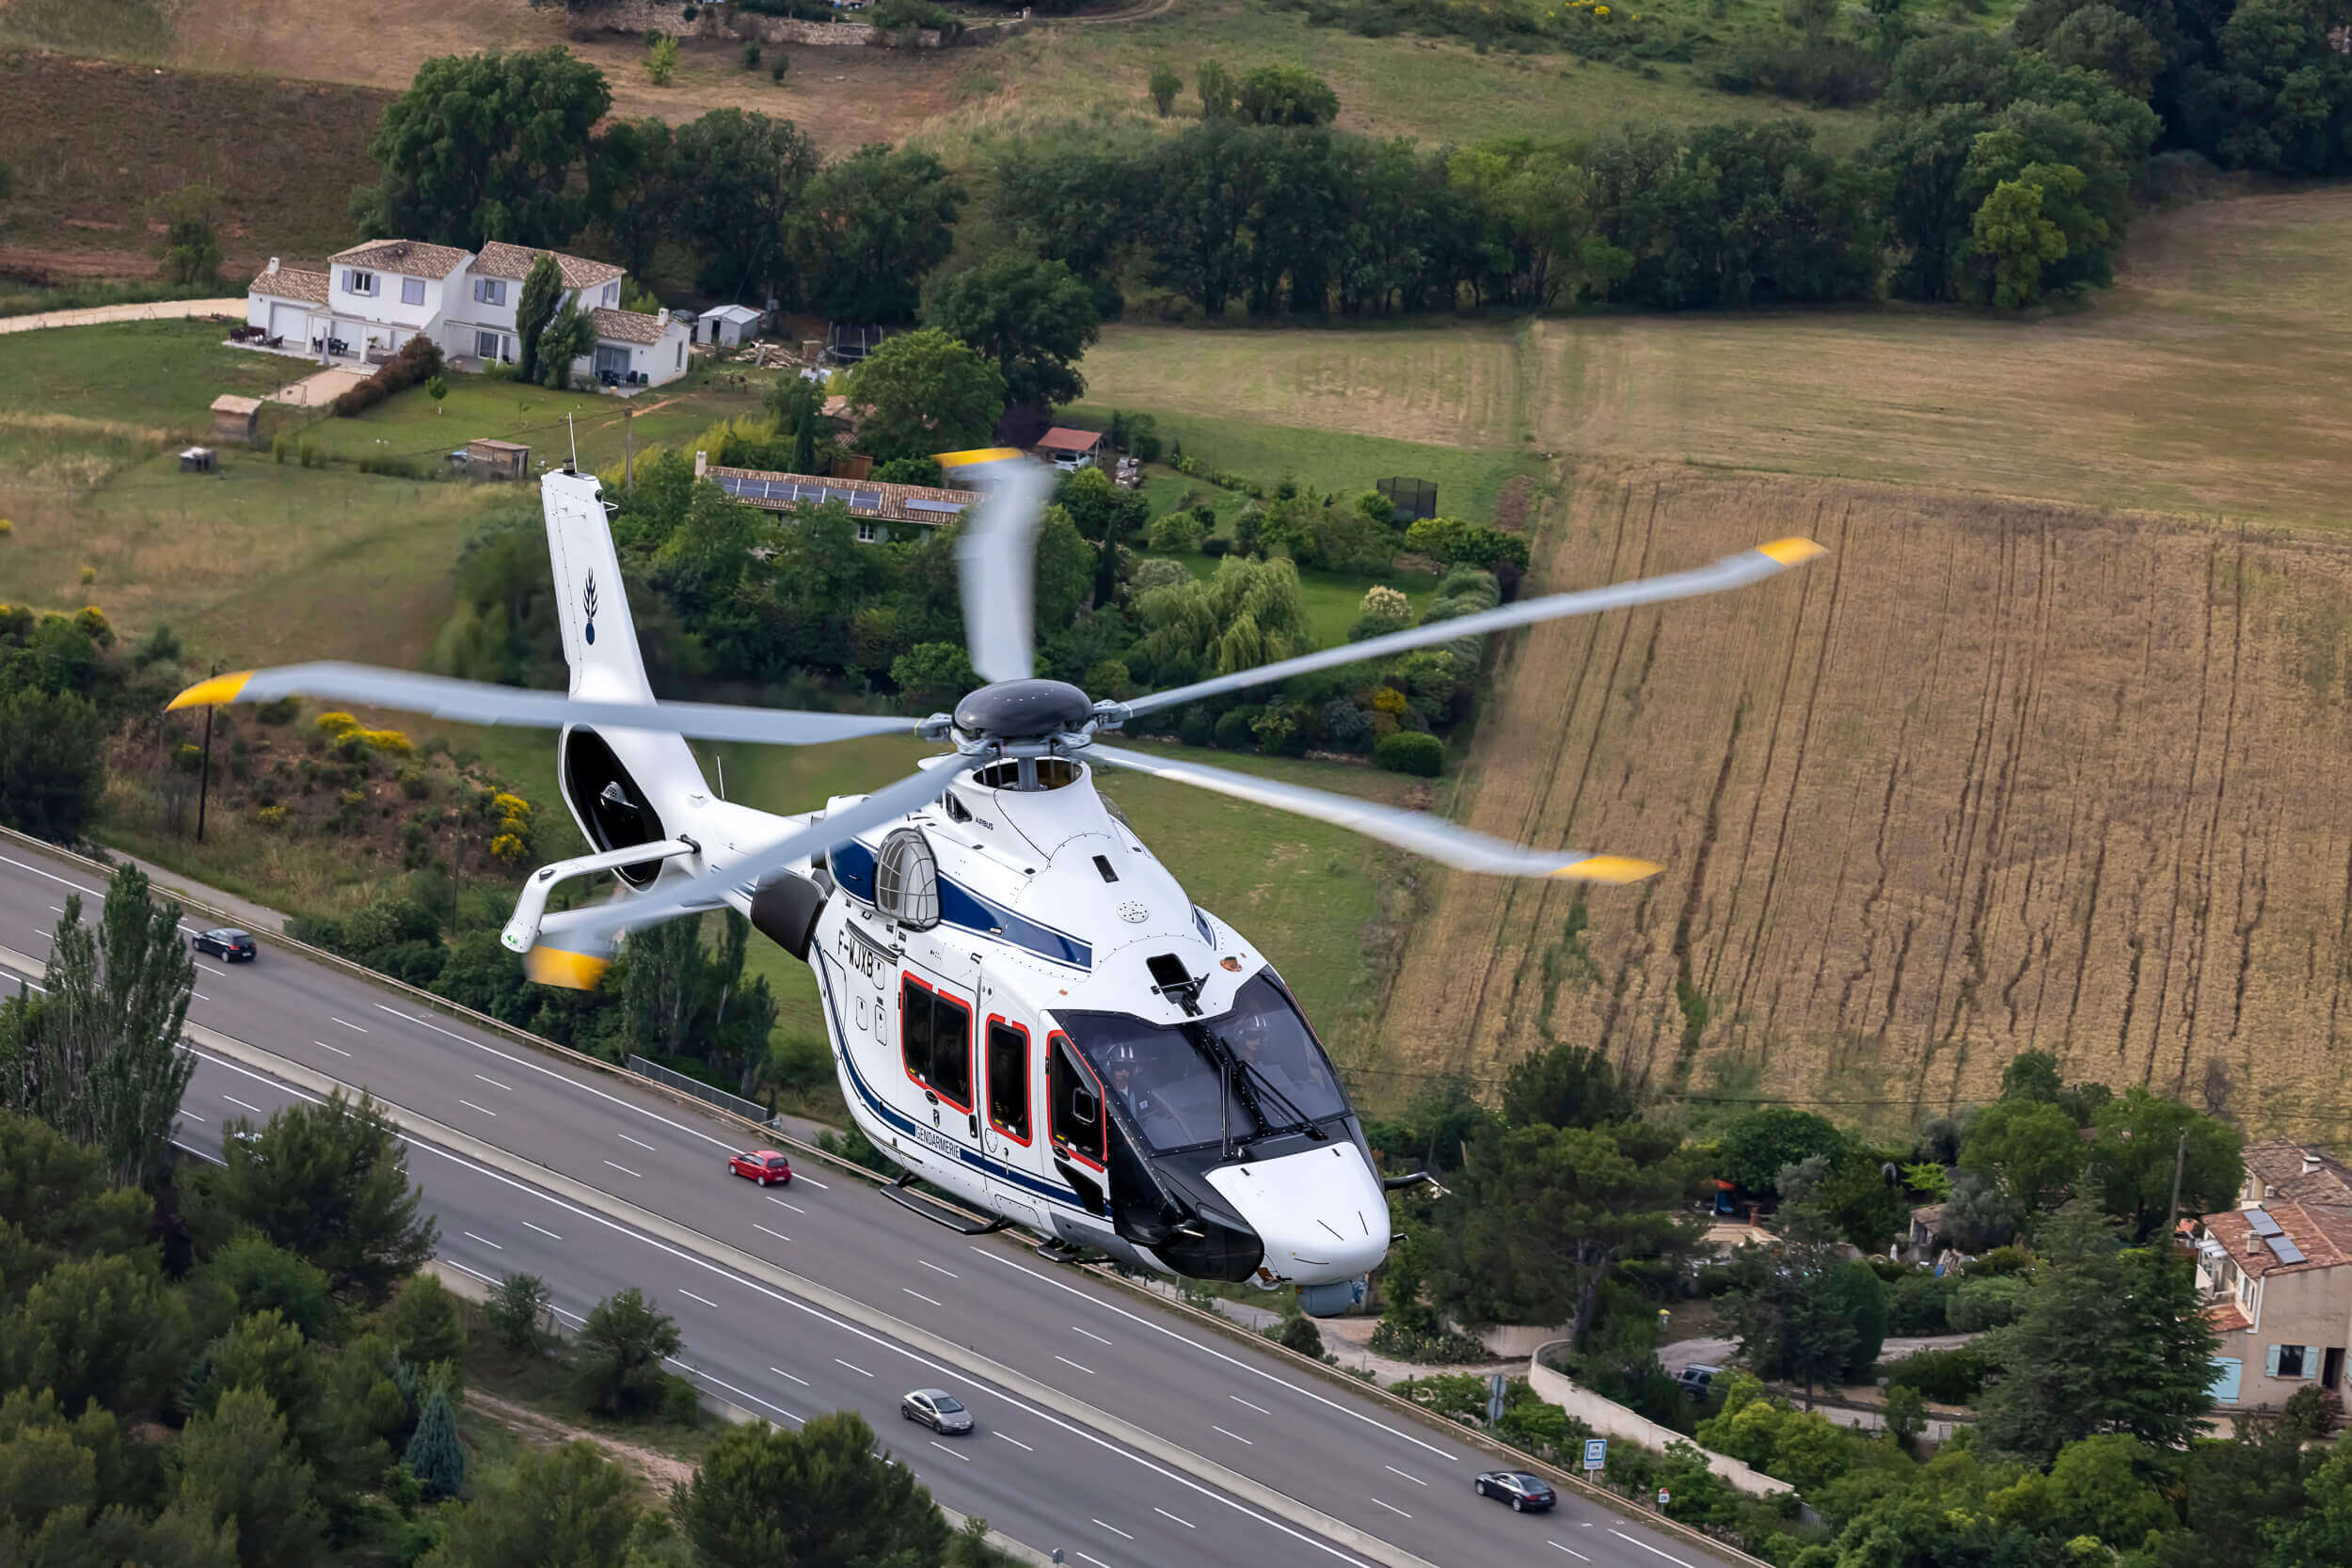 H160 Gendarmerie version begins flight test campaign